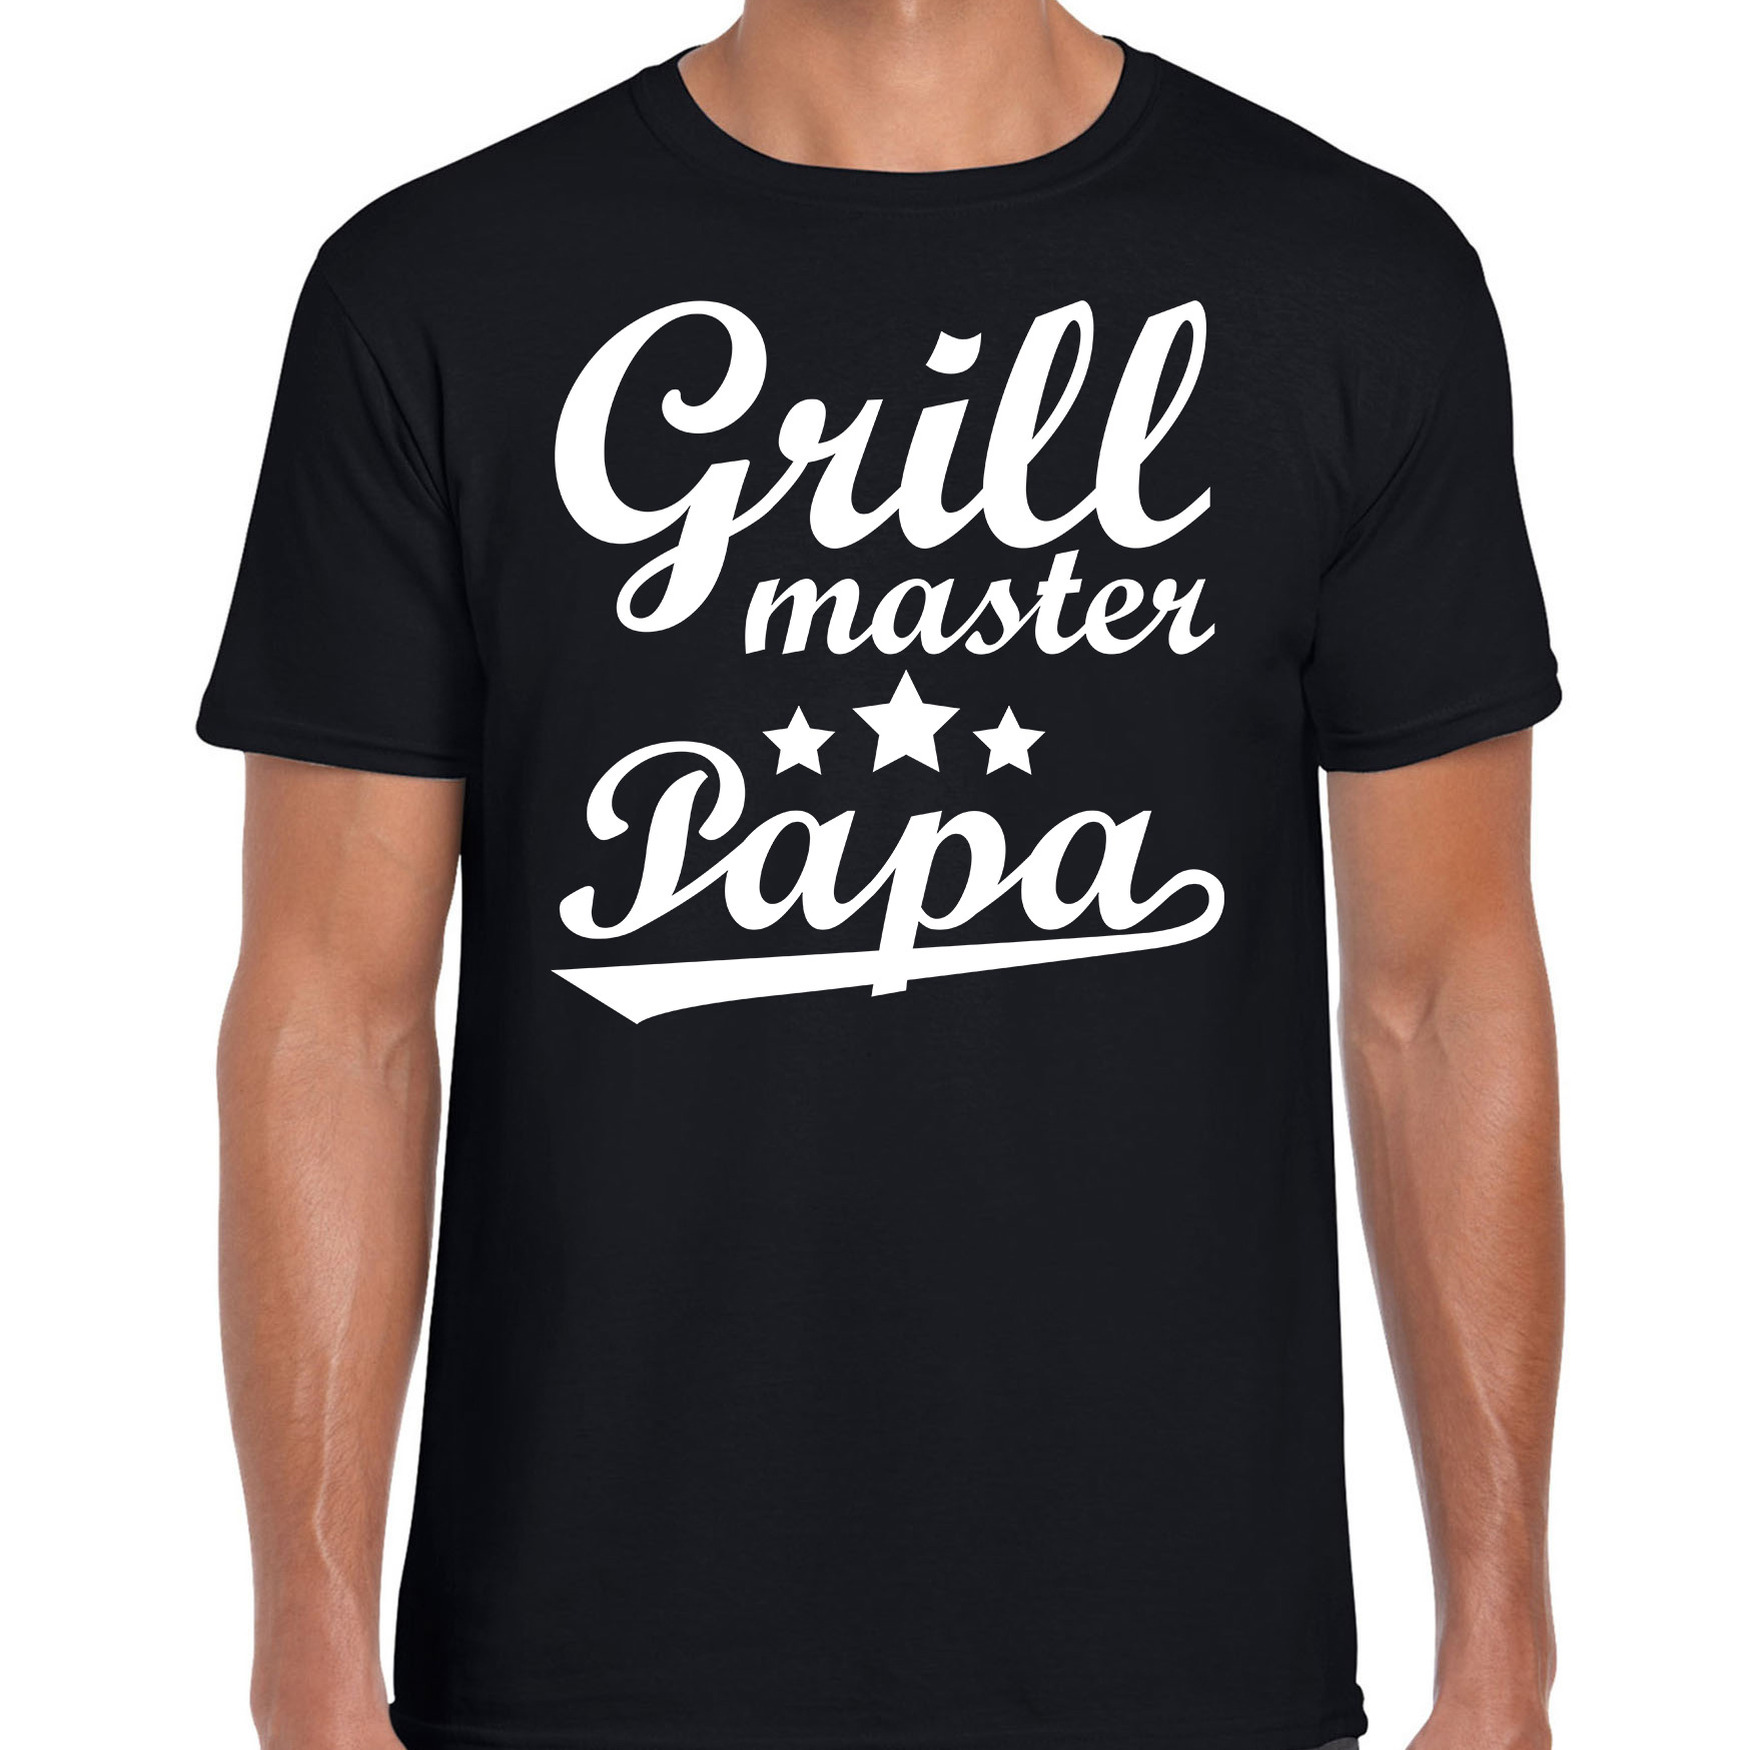 Grill master papa bbq-barbecue cadeau t-shirt zwart voor heren